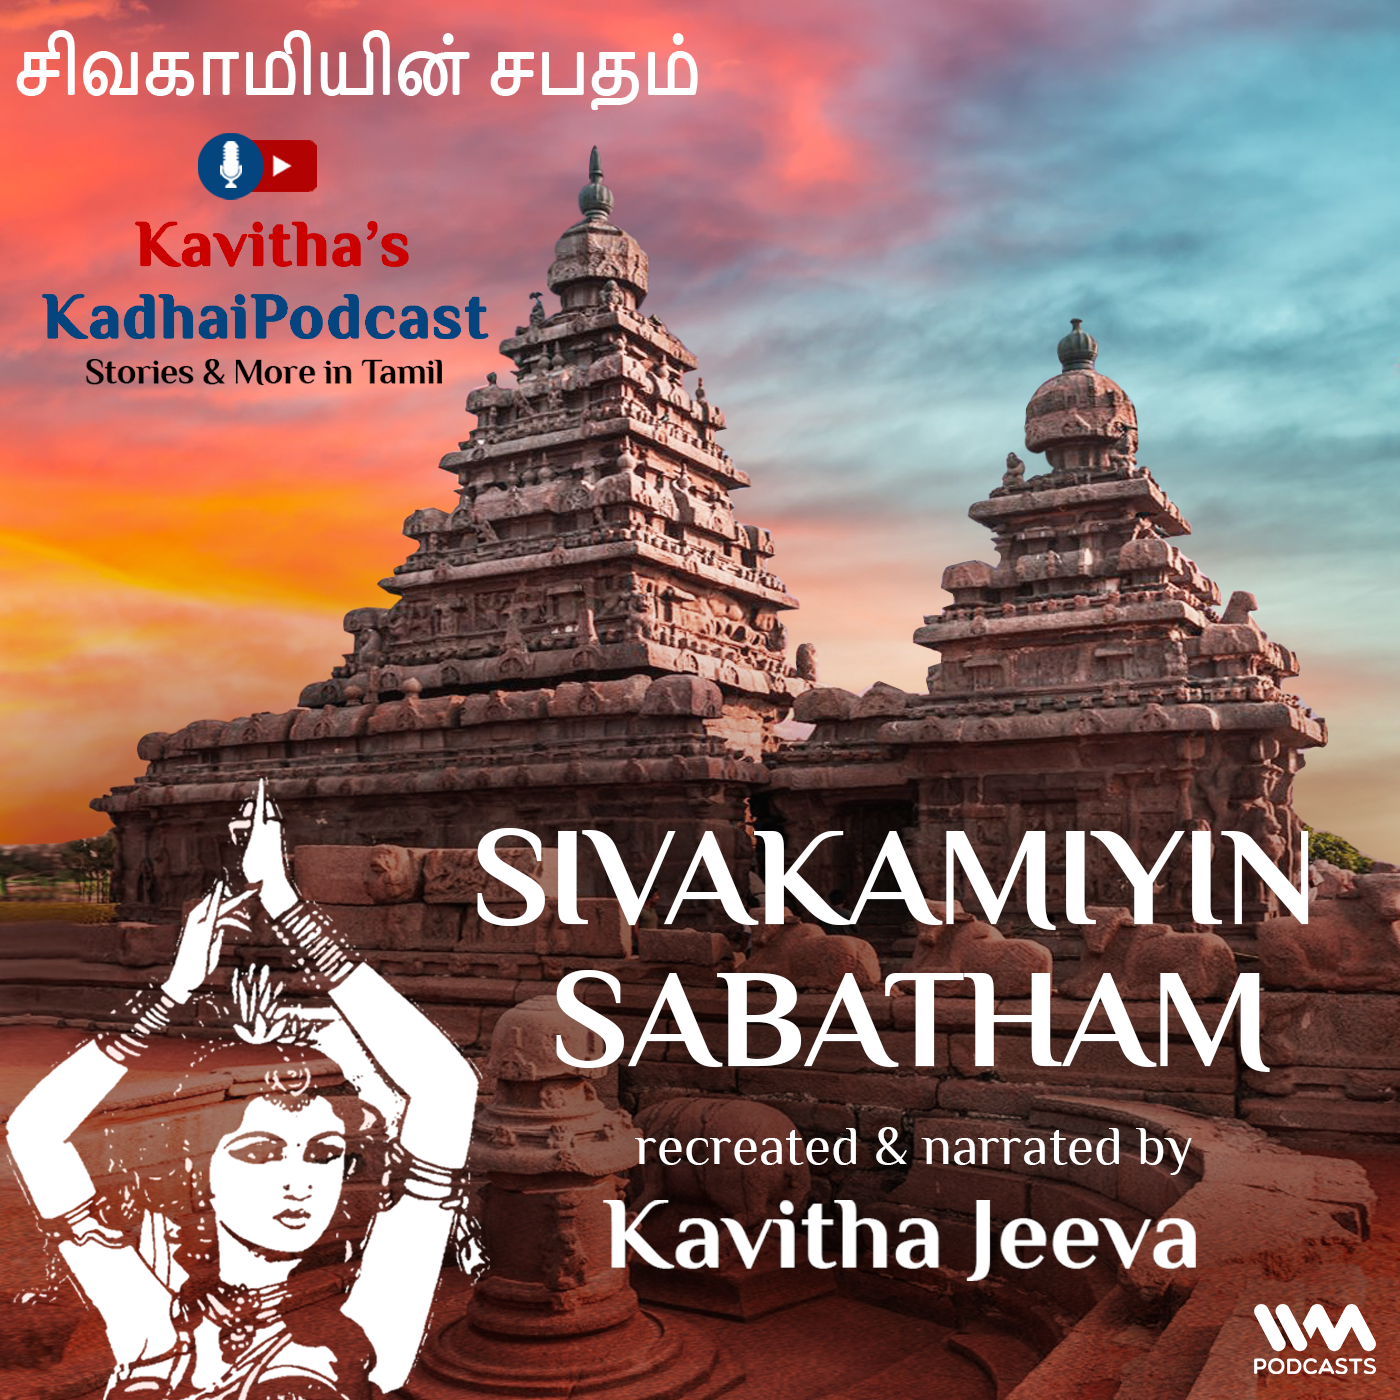 KadhaiPodcast's Sivakamiyin Sabatham with Kavitha Jeeva - Episode #99